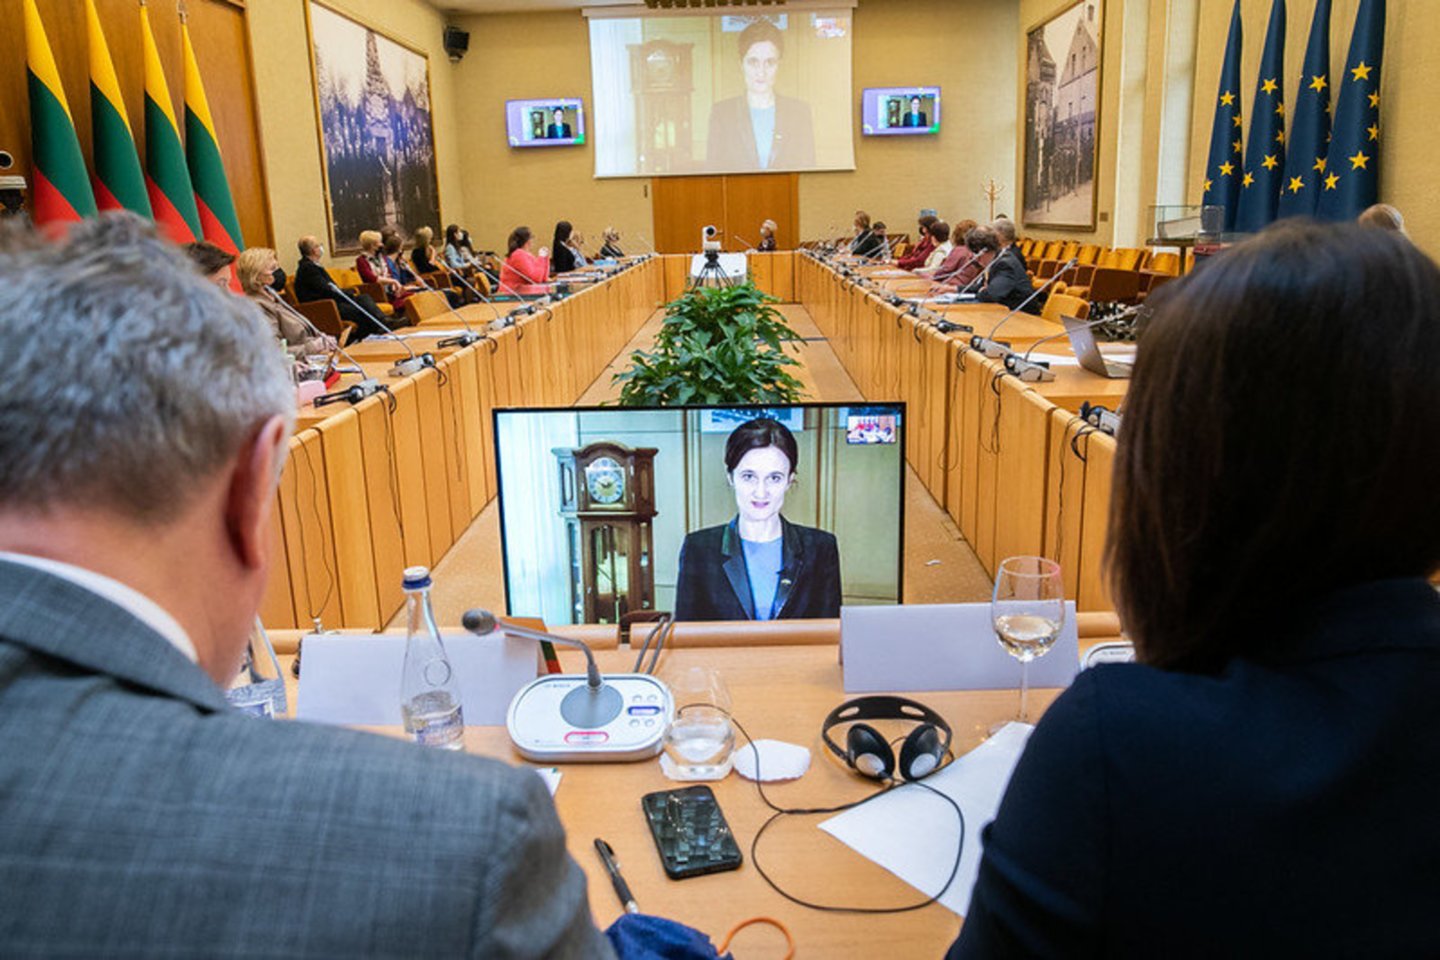  Photo courtesy of the Chancellery of the Seimas (by Dž. G. Barysaitė)